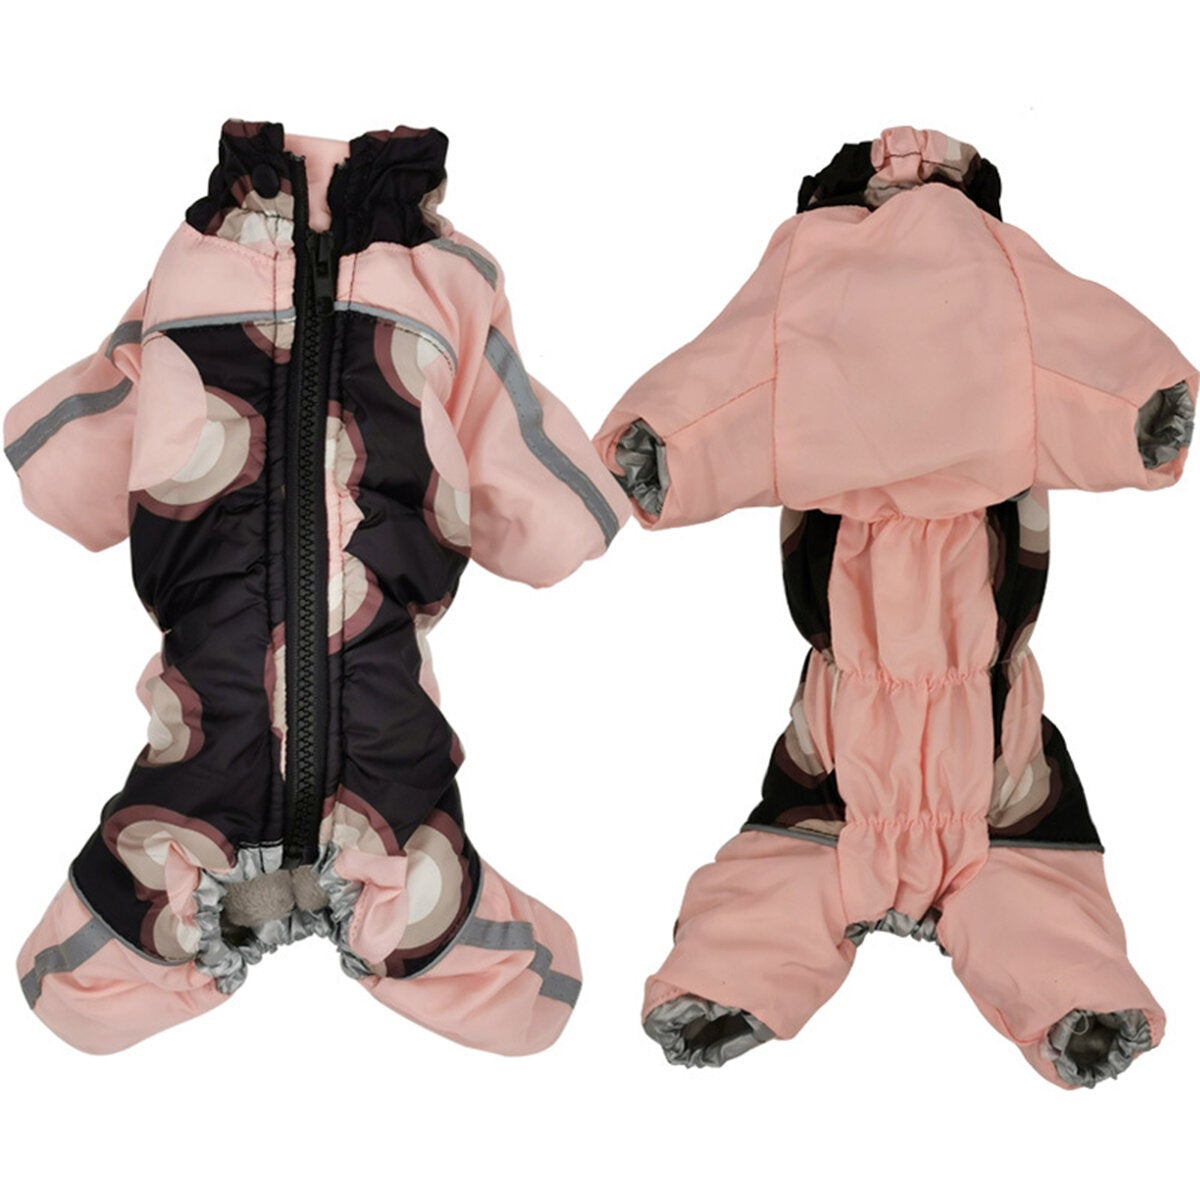 Waterproof Pet Dog Warm Padded Vest Coat Clothes Puppy Winter Jacket Apparel